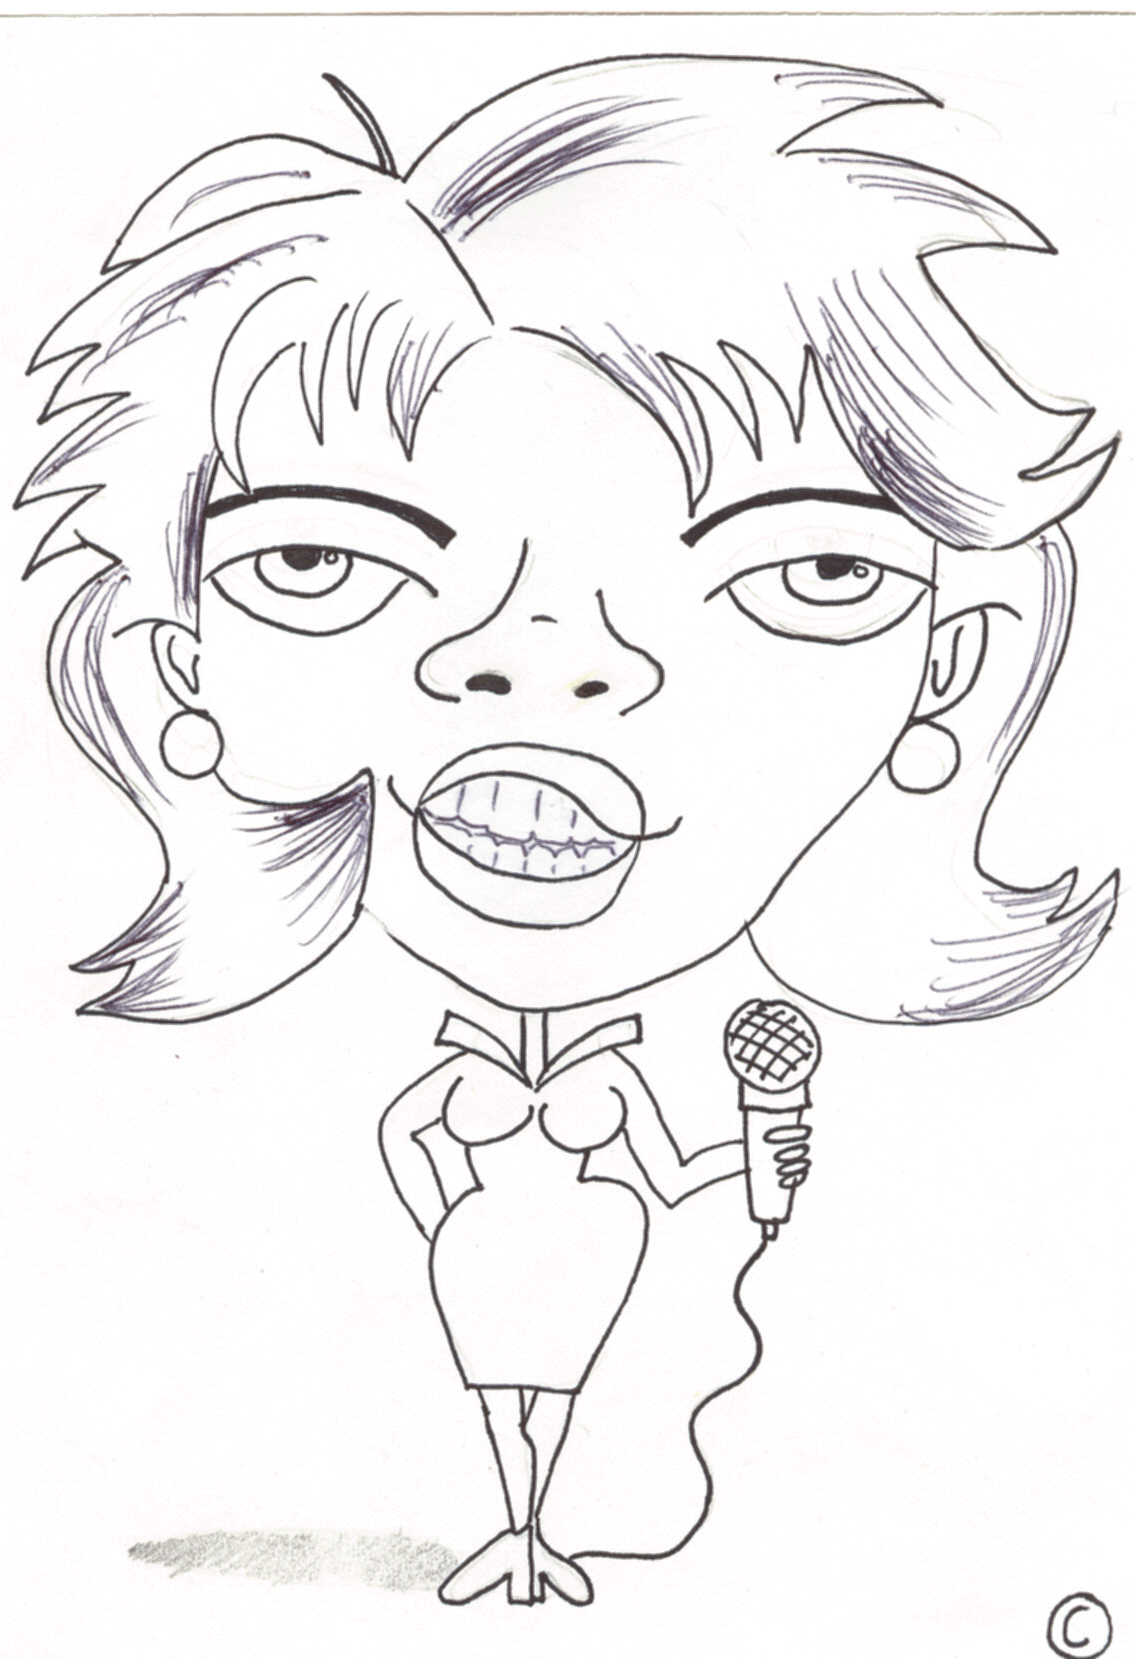 Cartoon of Oprah Winfrey by Anneke 2003